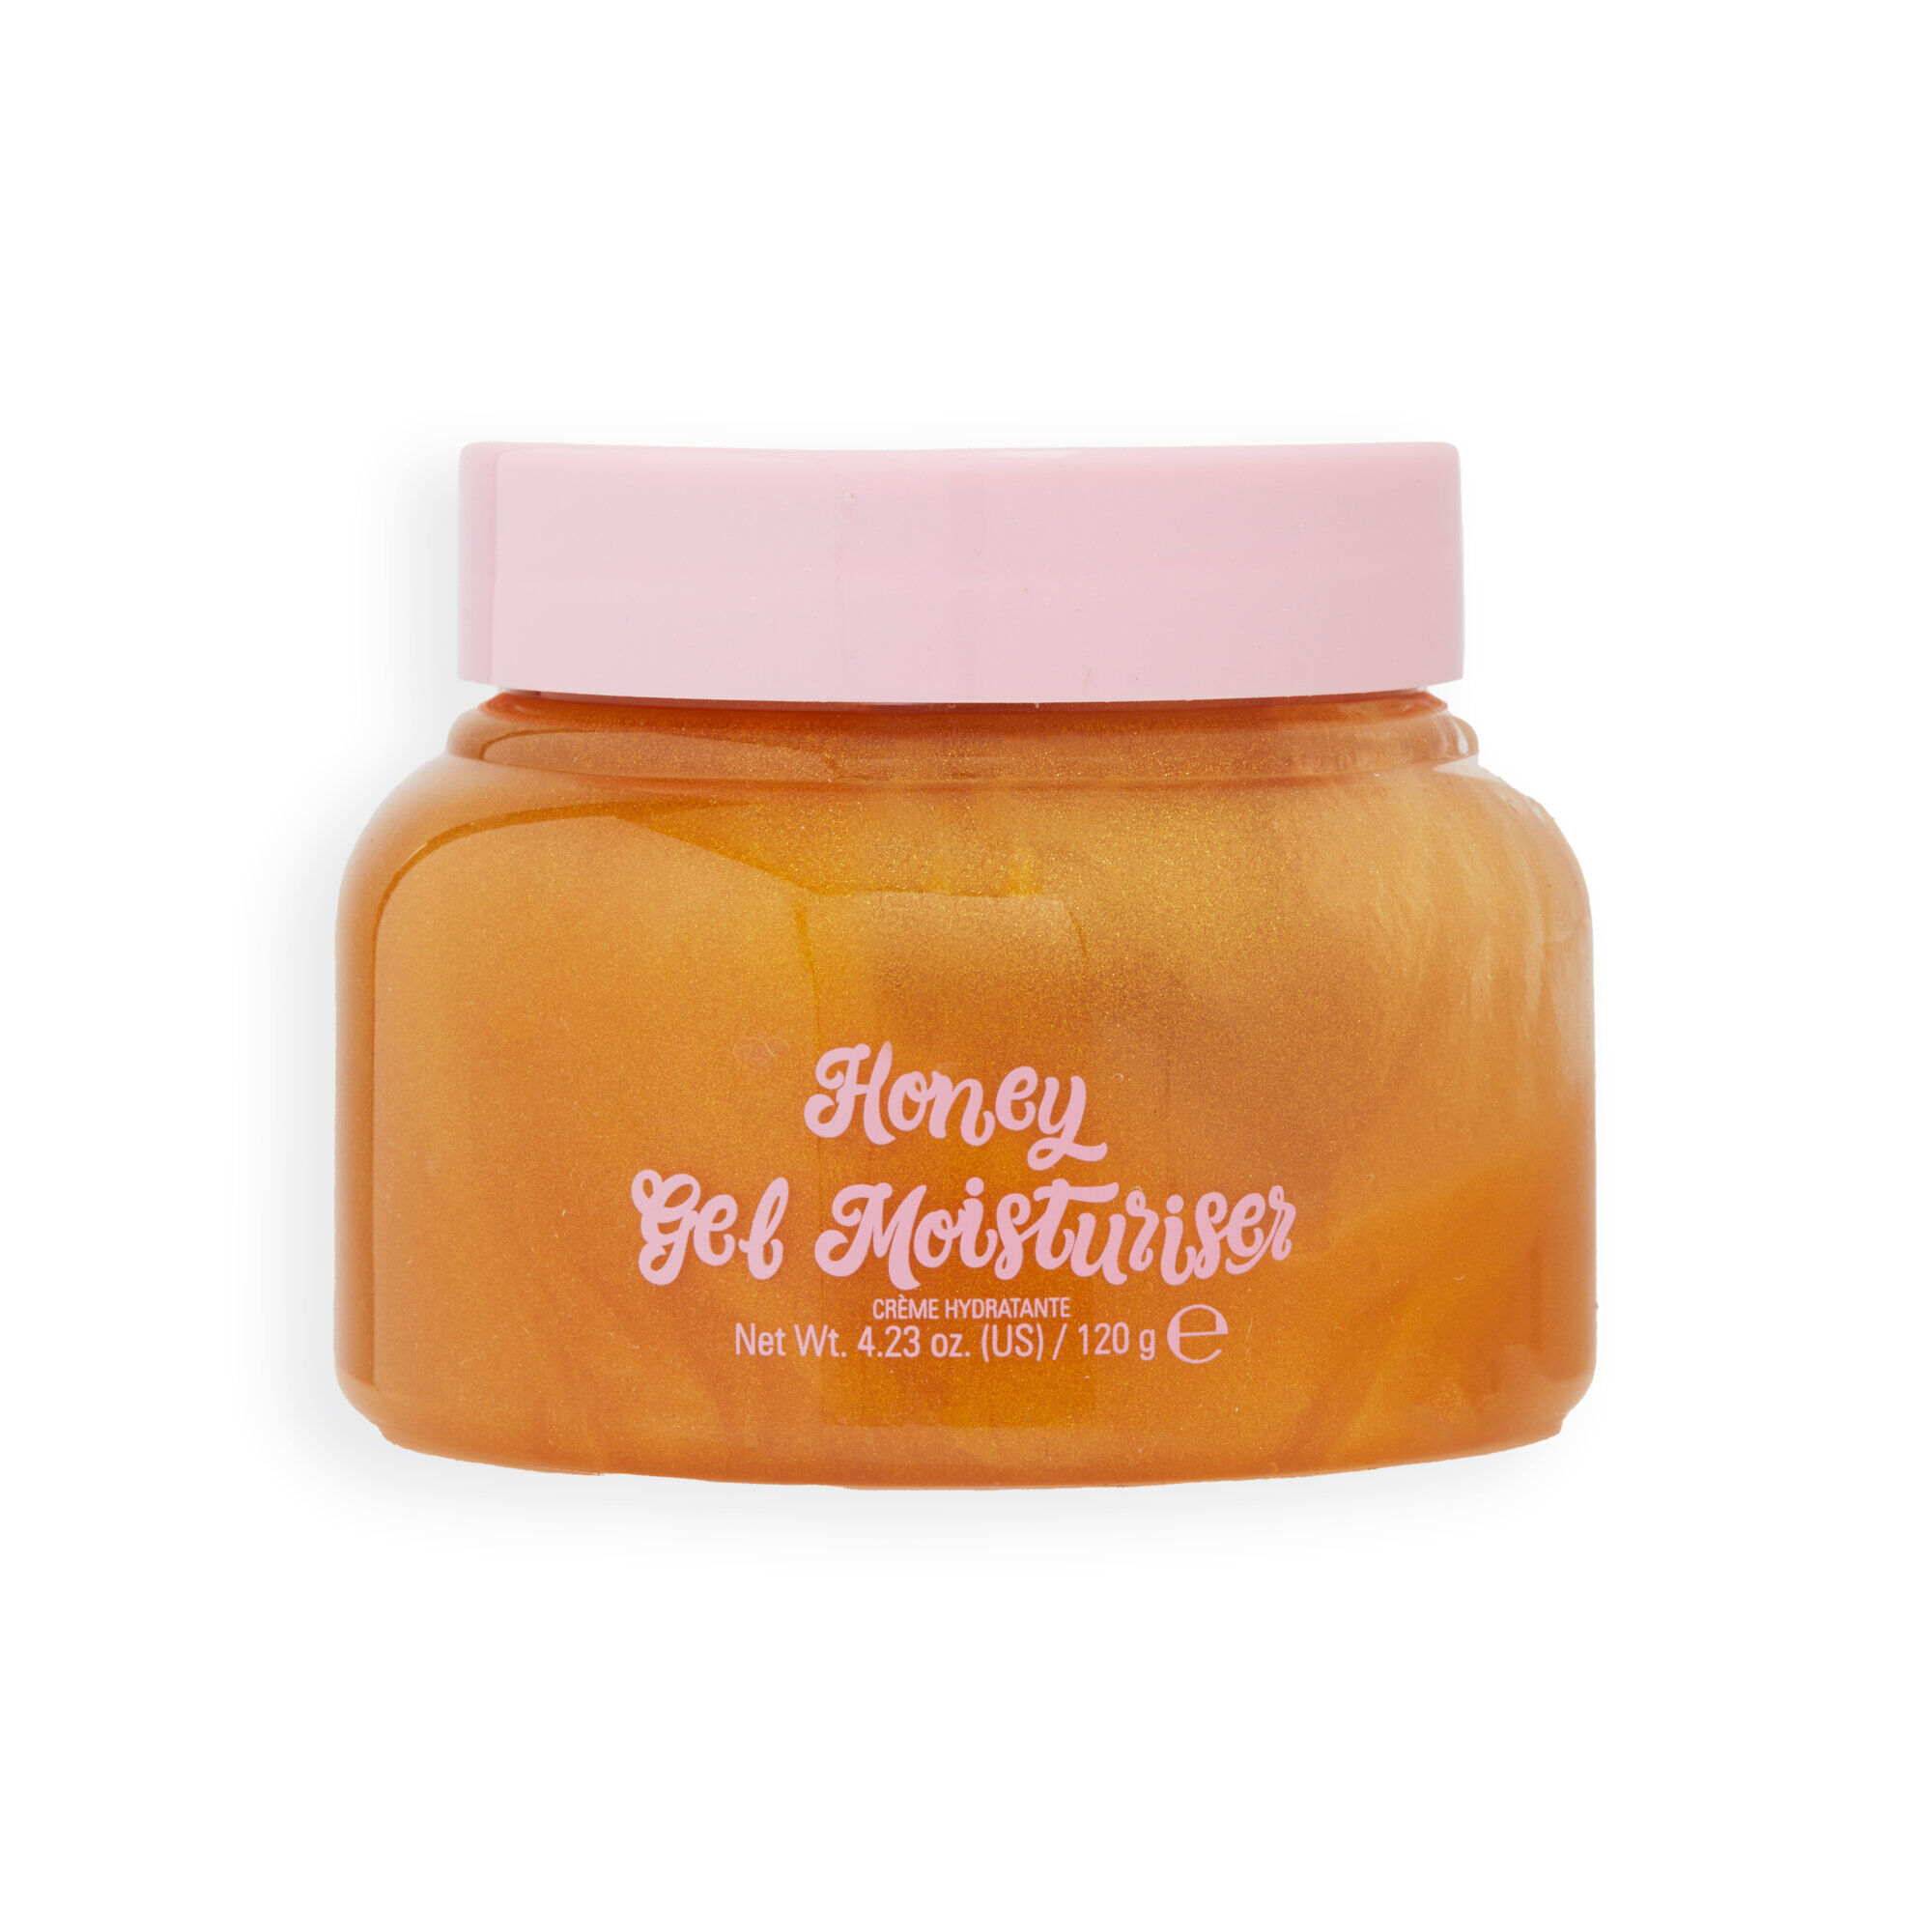 Royal Honey Shower Gel- United States